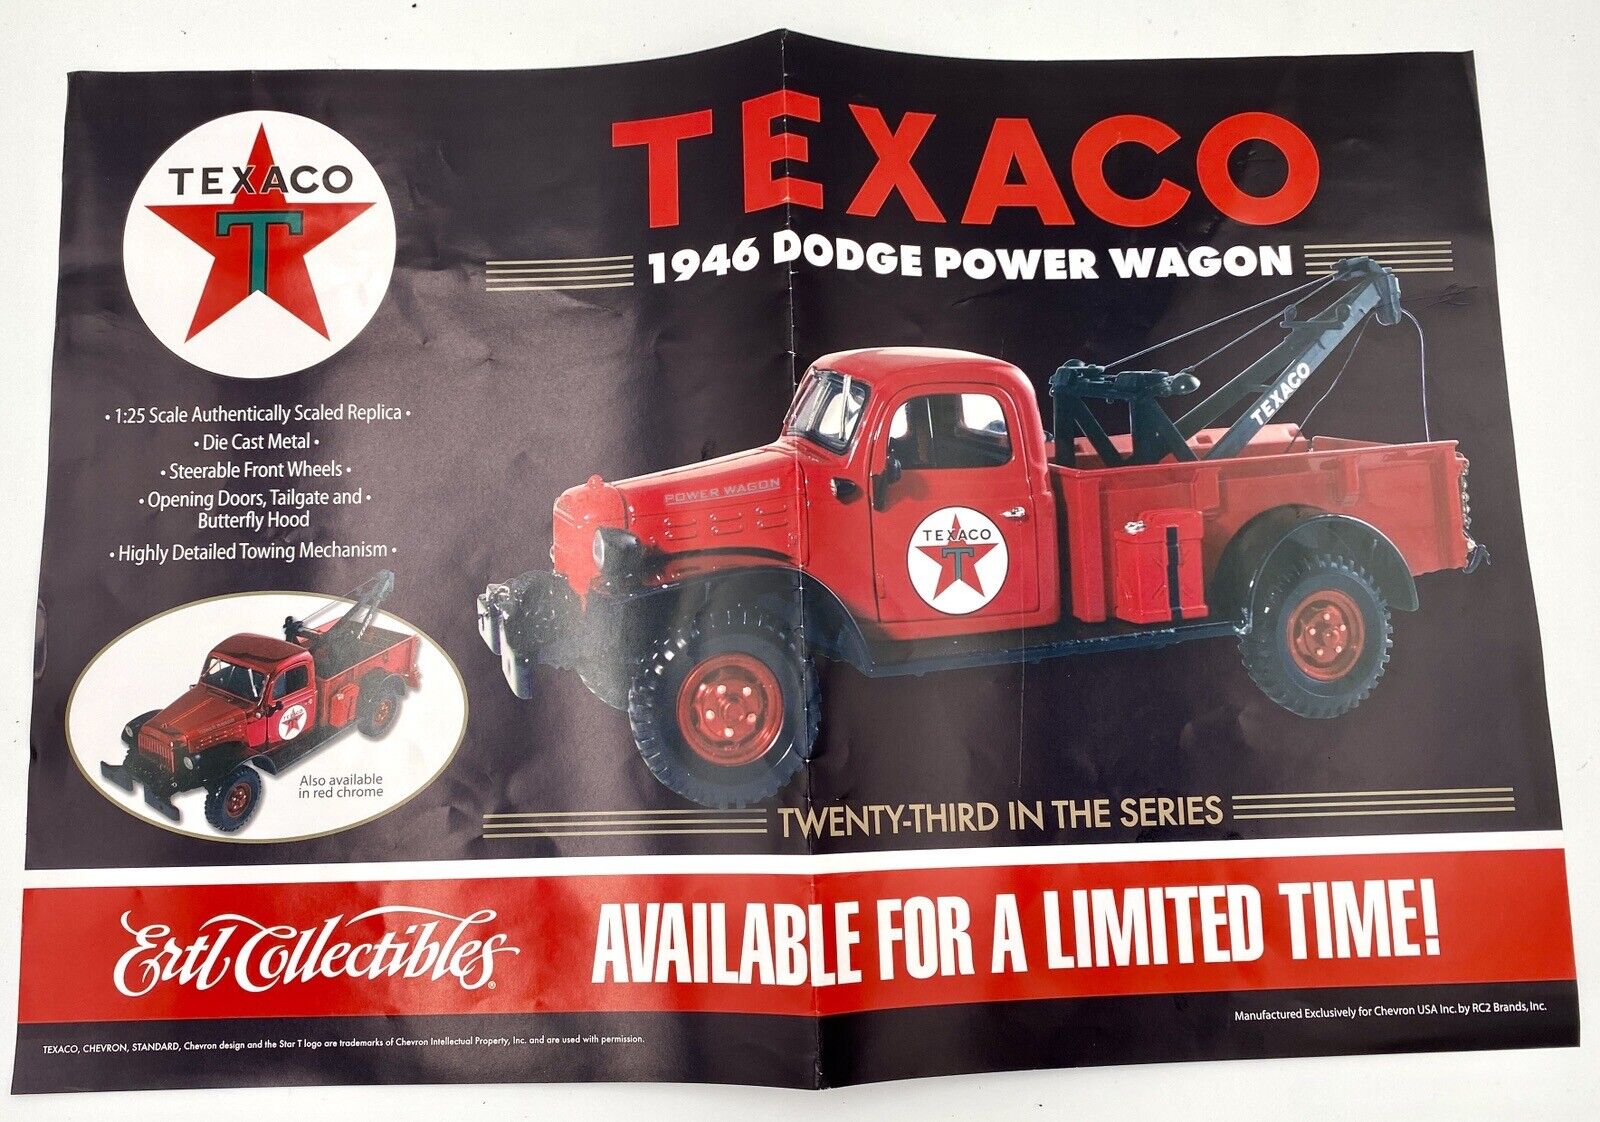 Ertl Collectibles TEXACO Display Poster 1946 Dodge Power Wagon Advertisement